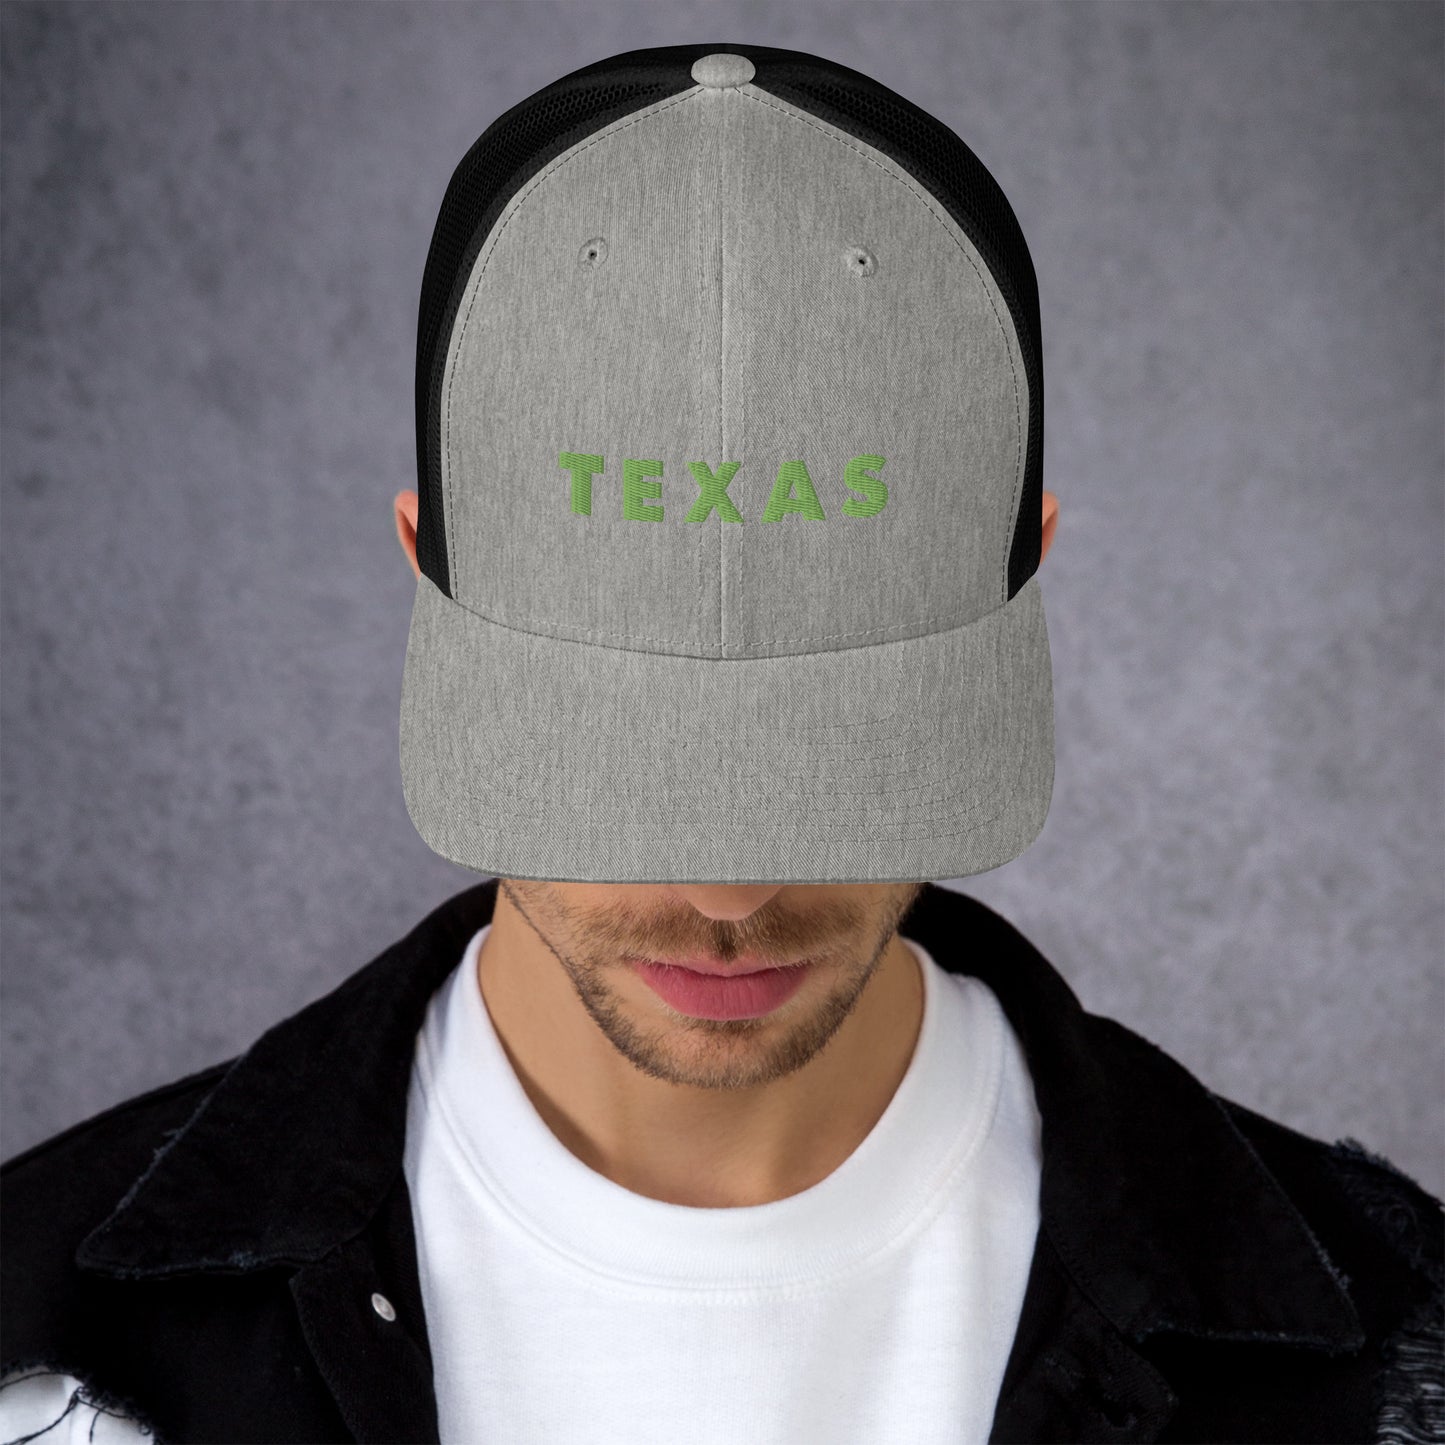 "Texas" trucker cap